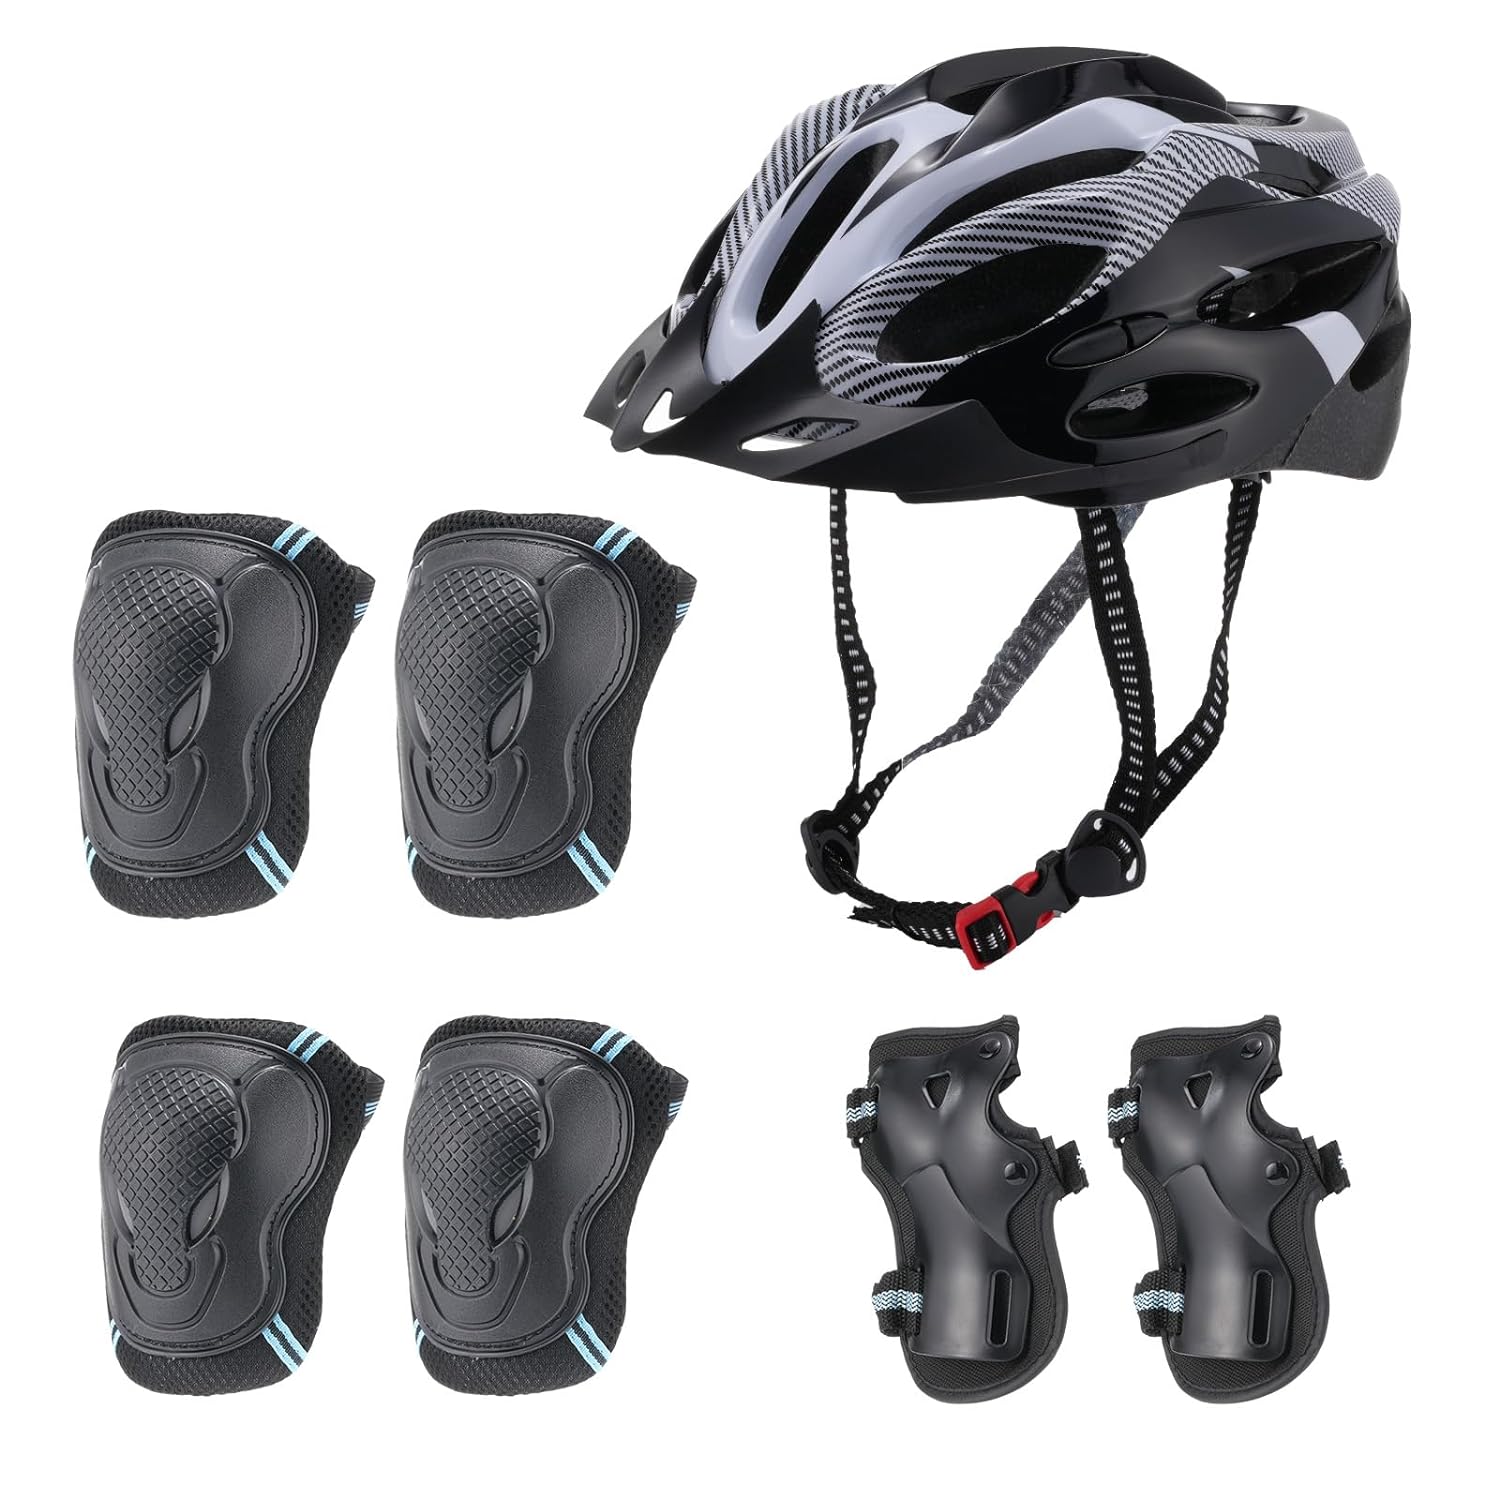 isinwheel Full Protective Gear Set 7-Pieces Pads Knee Pads Wrist Guards Multi-functional Sport Helmet